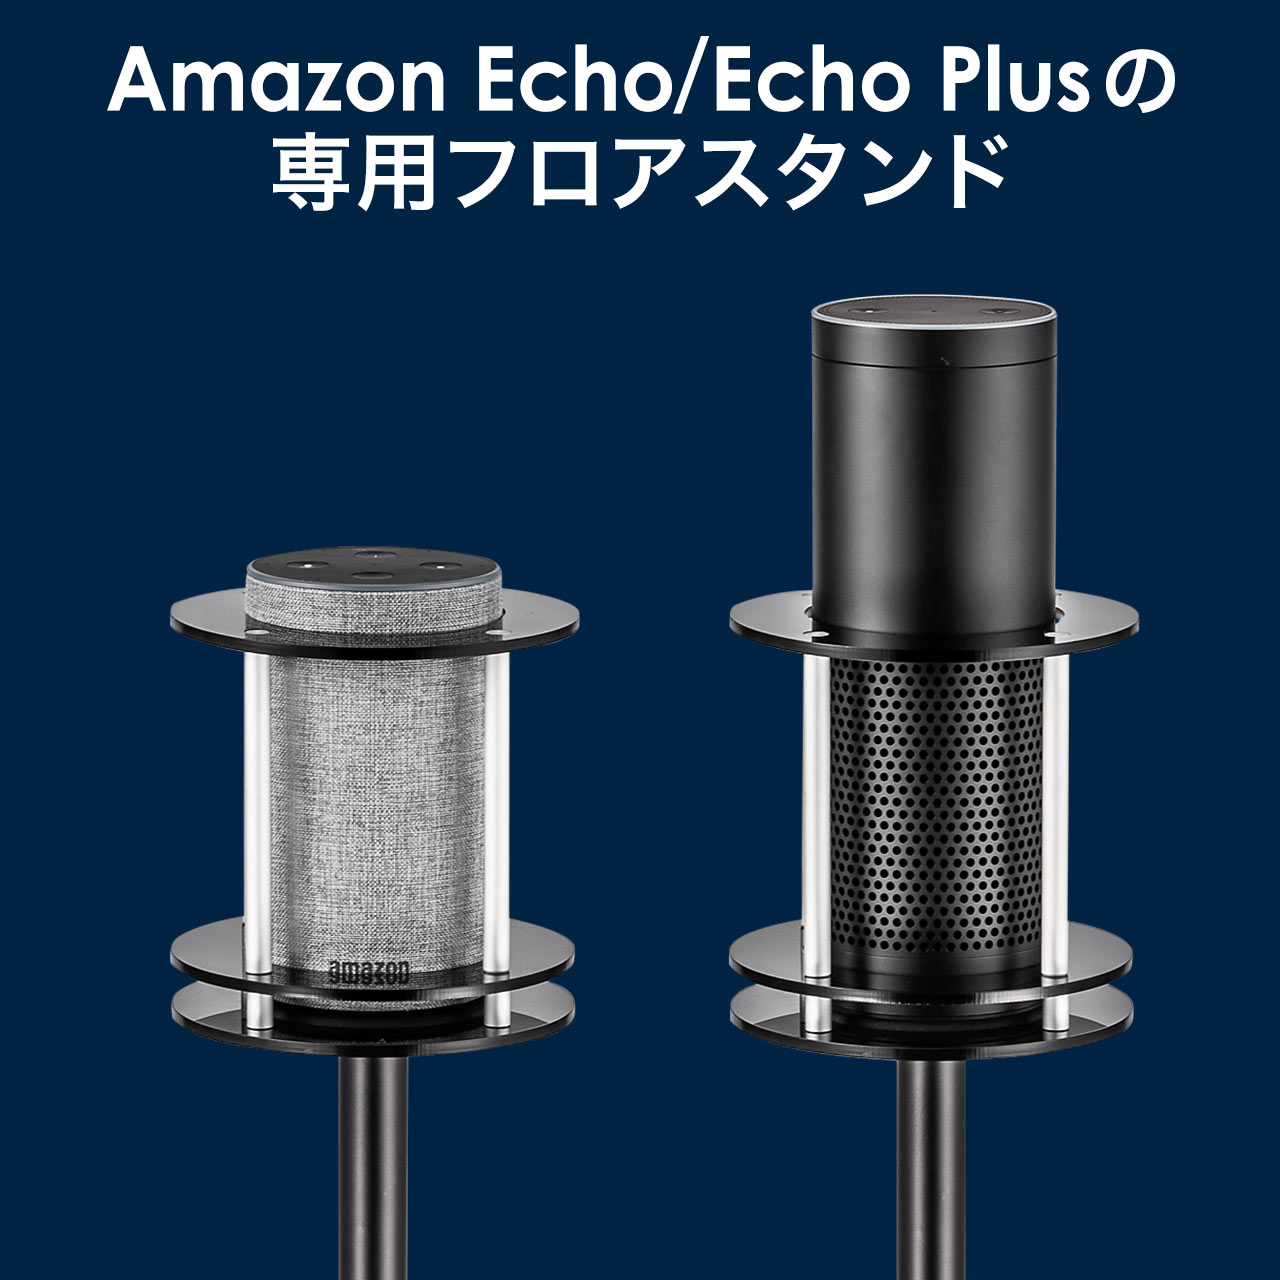 Amazon Echo tAX^hiAmazon Echo Plus X^h/ItBXErOE߁j 100-ALST002